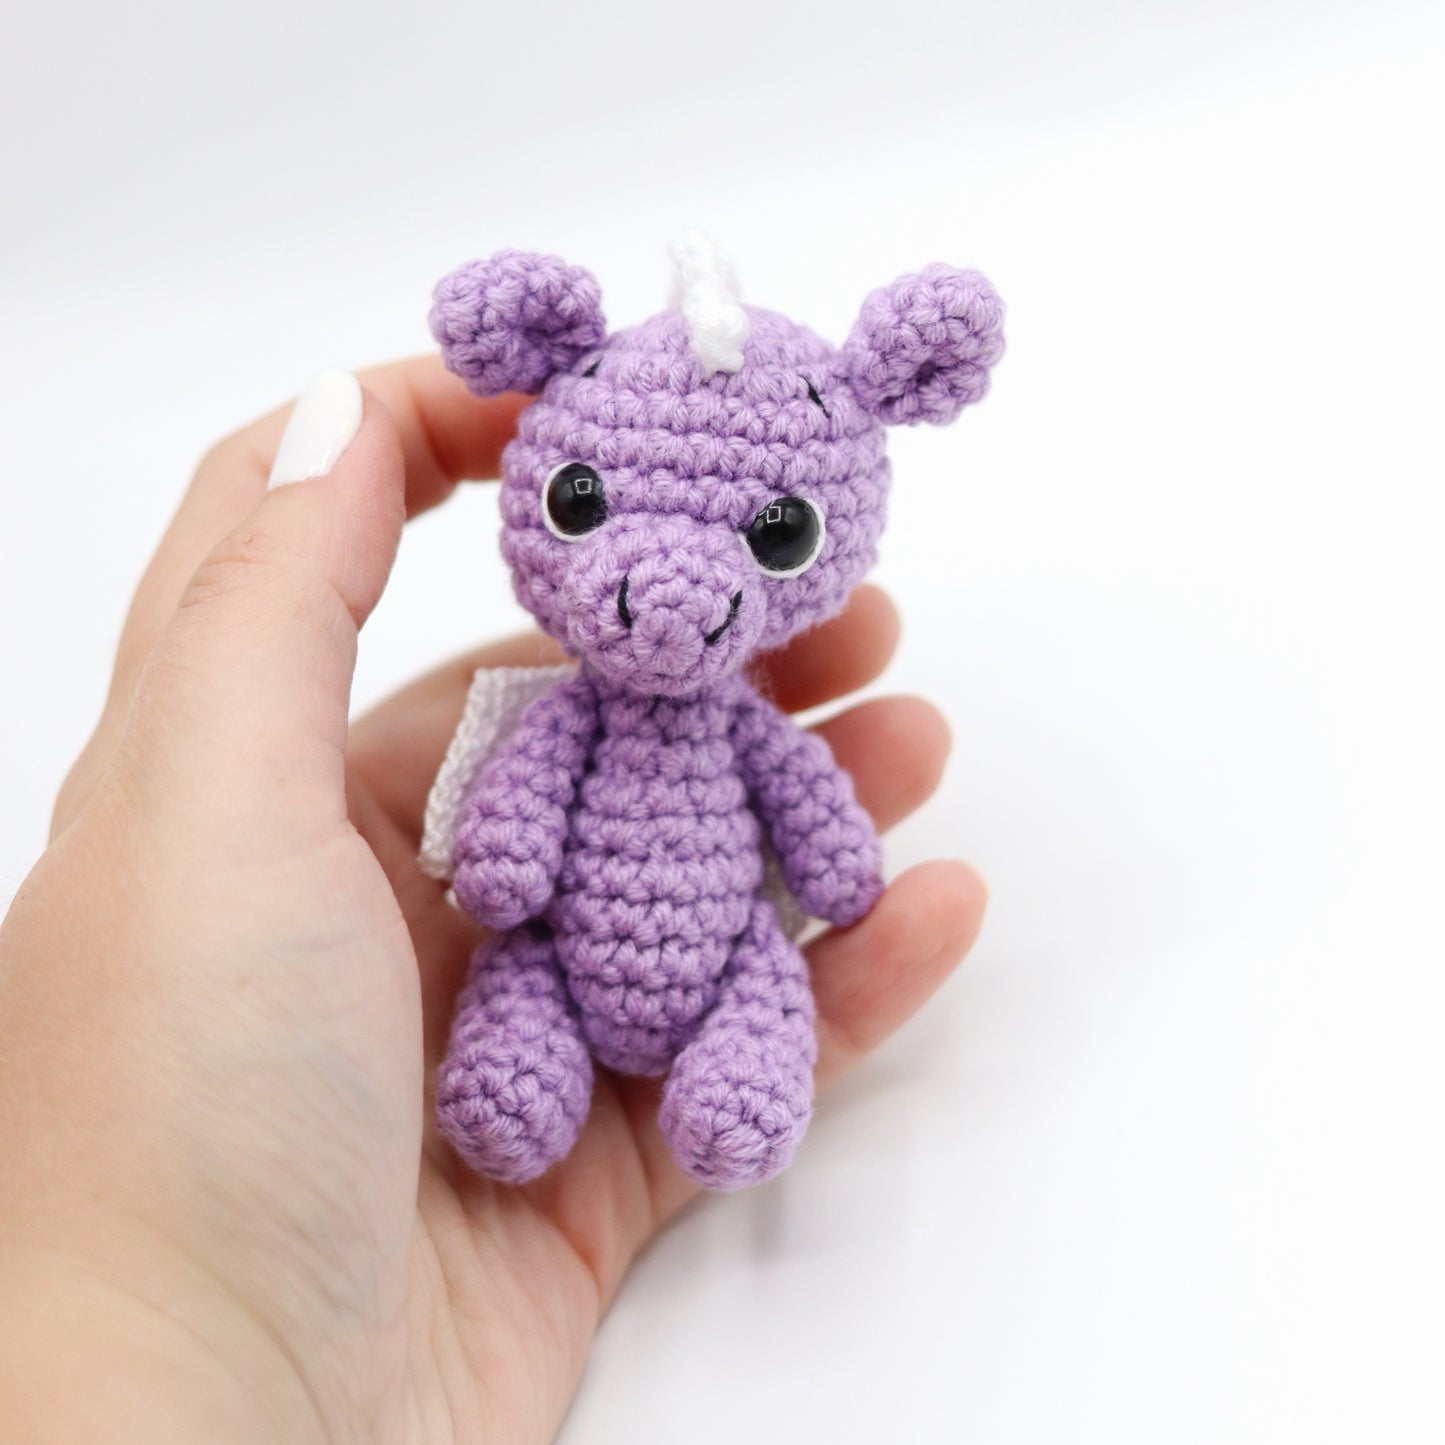 Handmade crochet small  dragon toy